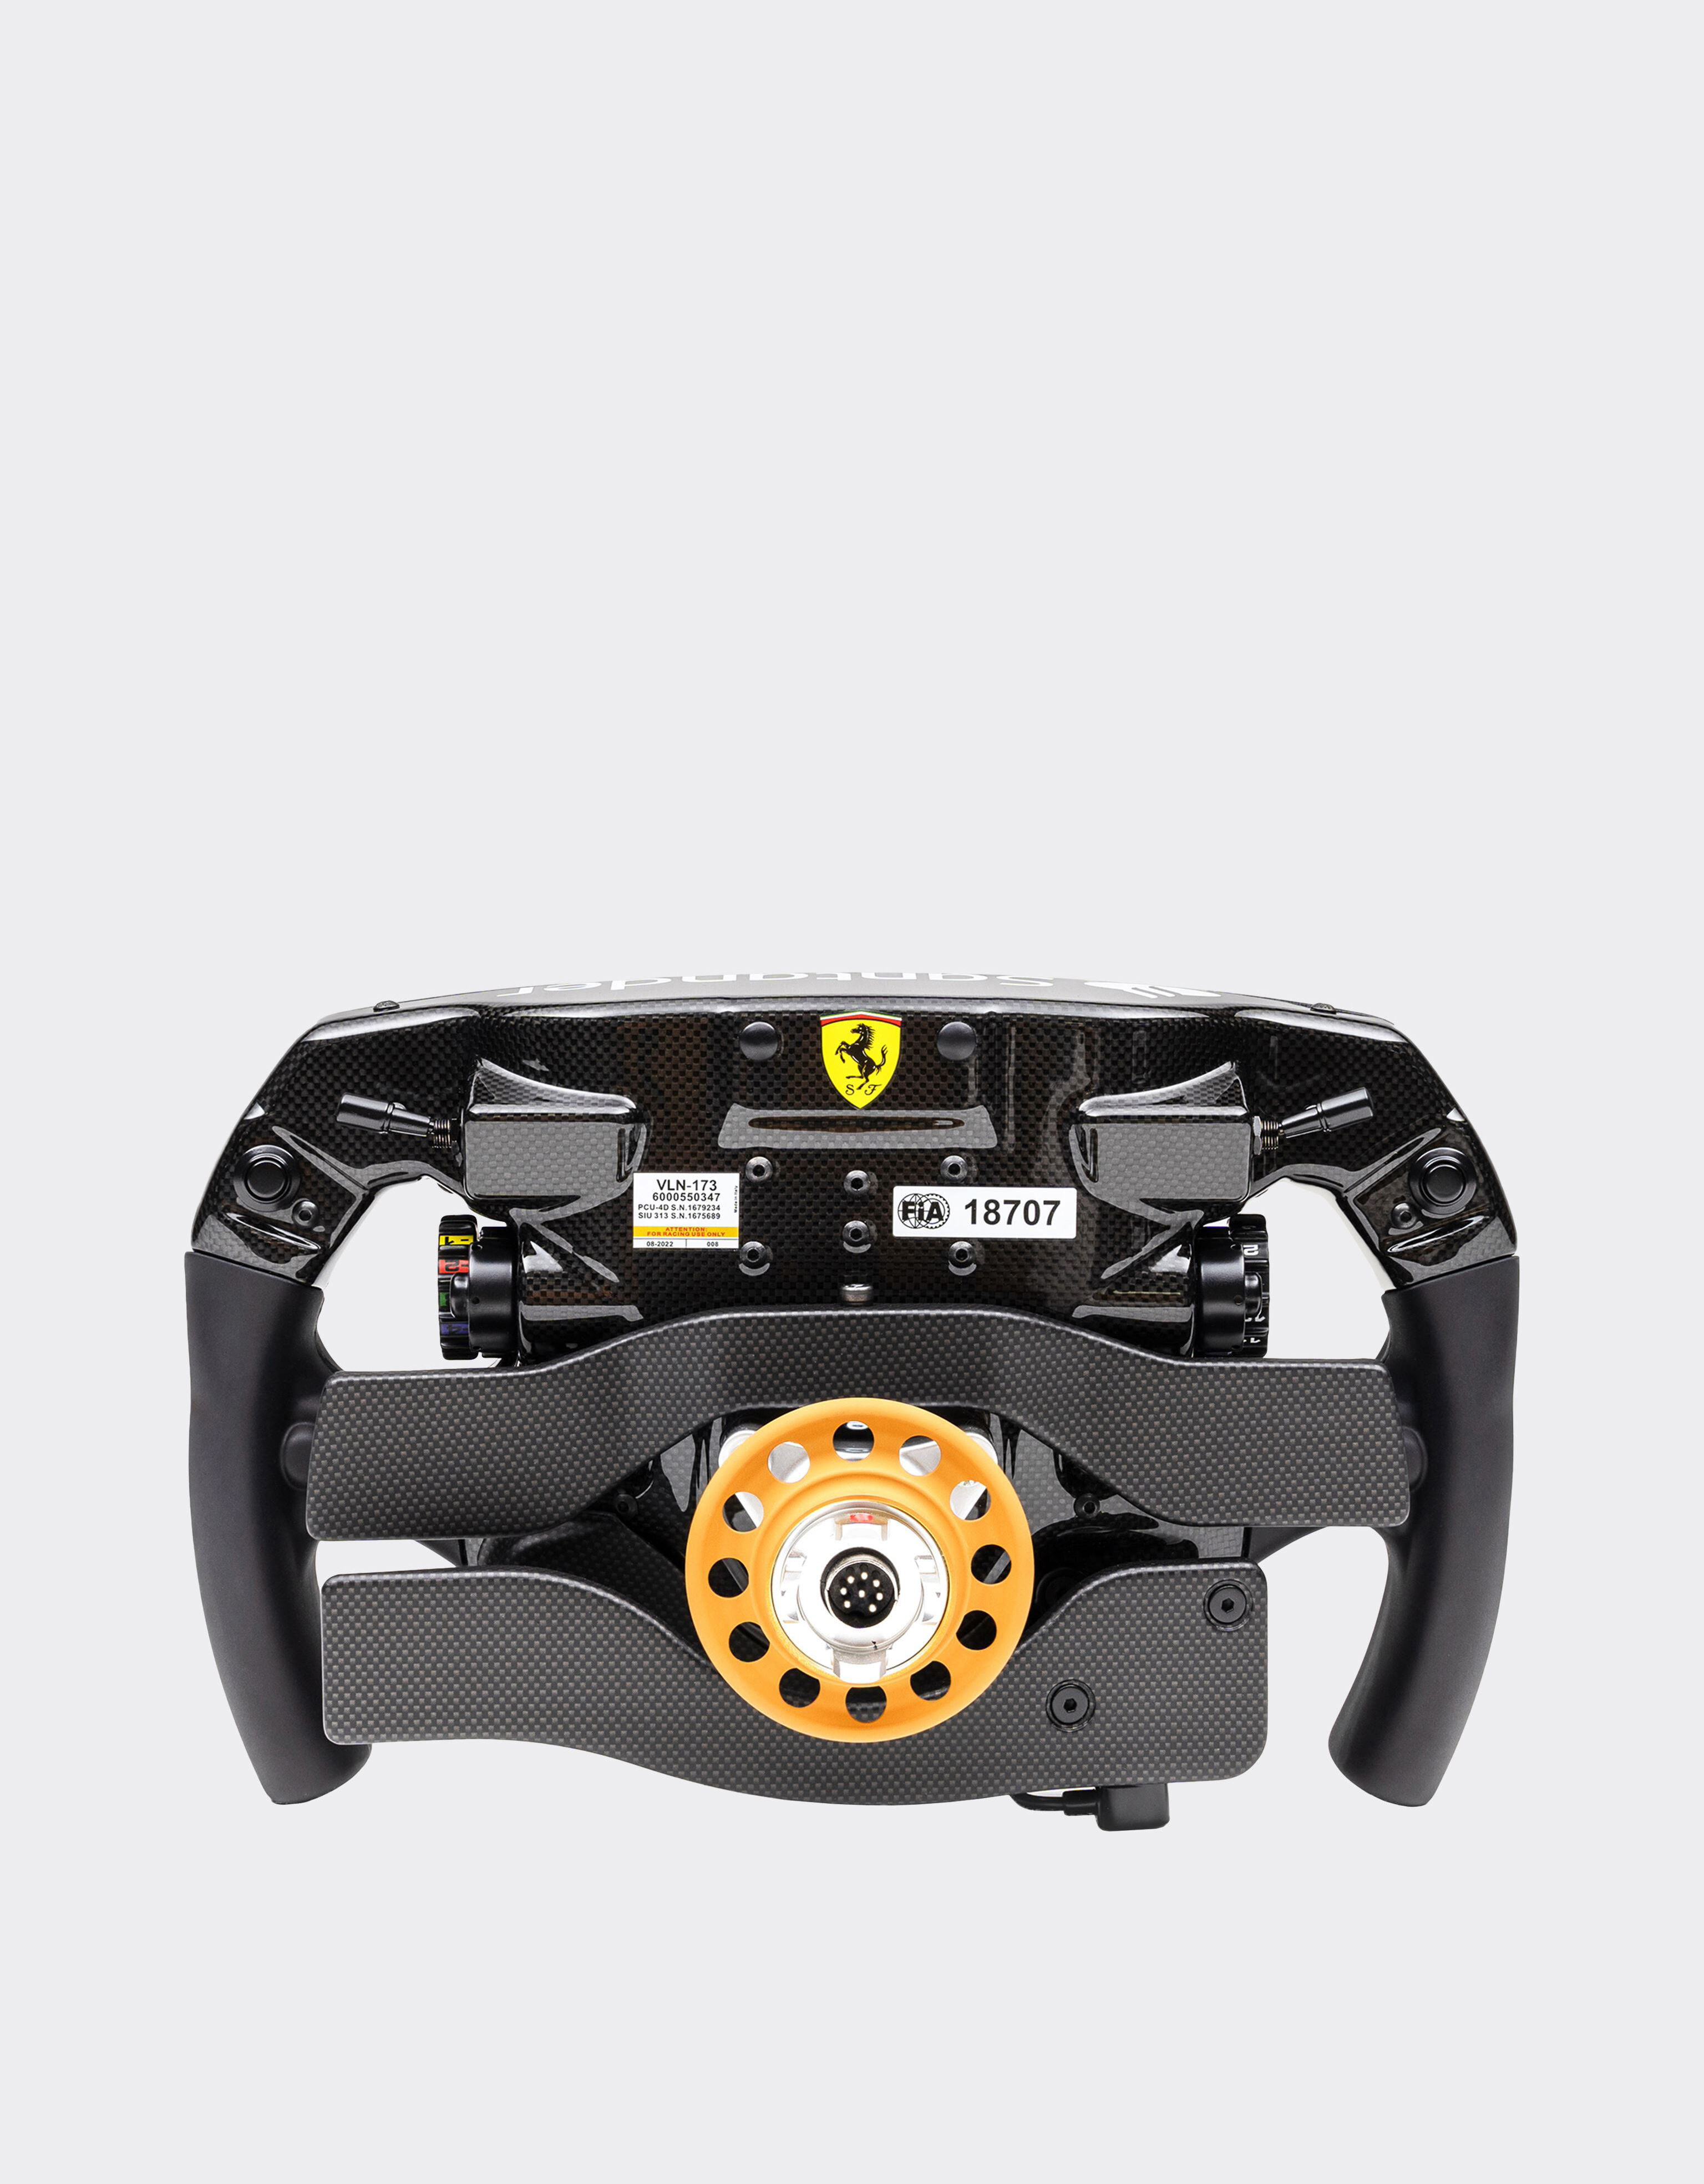 Ferrari Ferrari F1-75 steering wheel 1:1 scale model Black F0667f